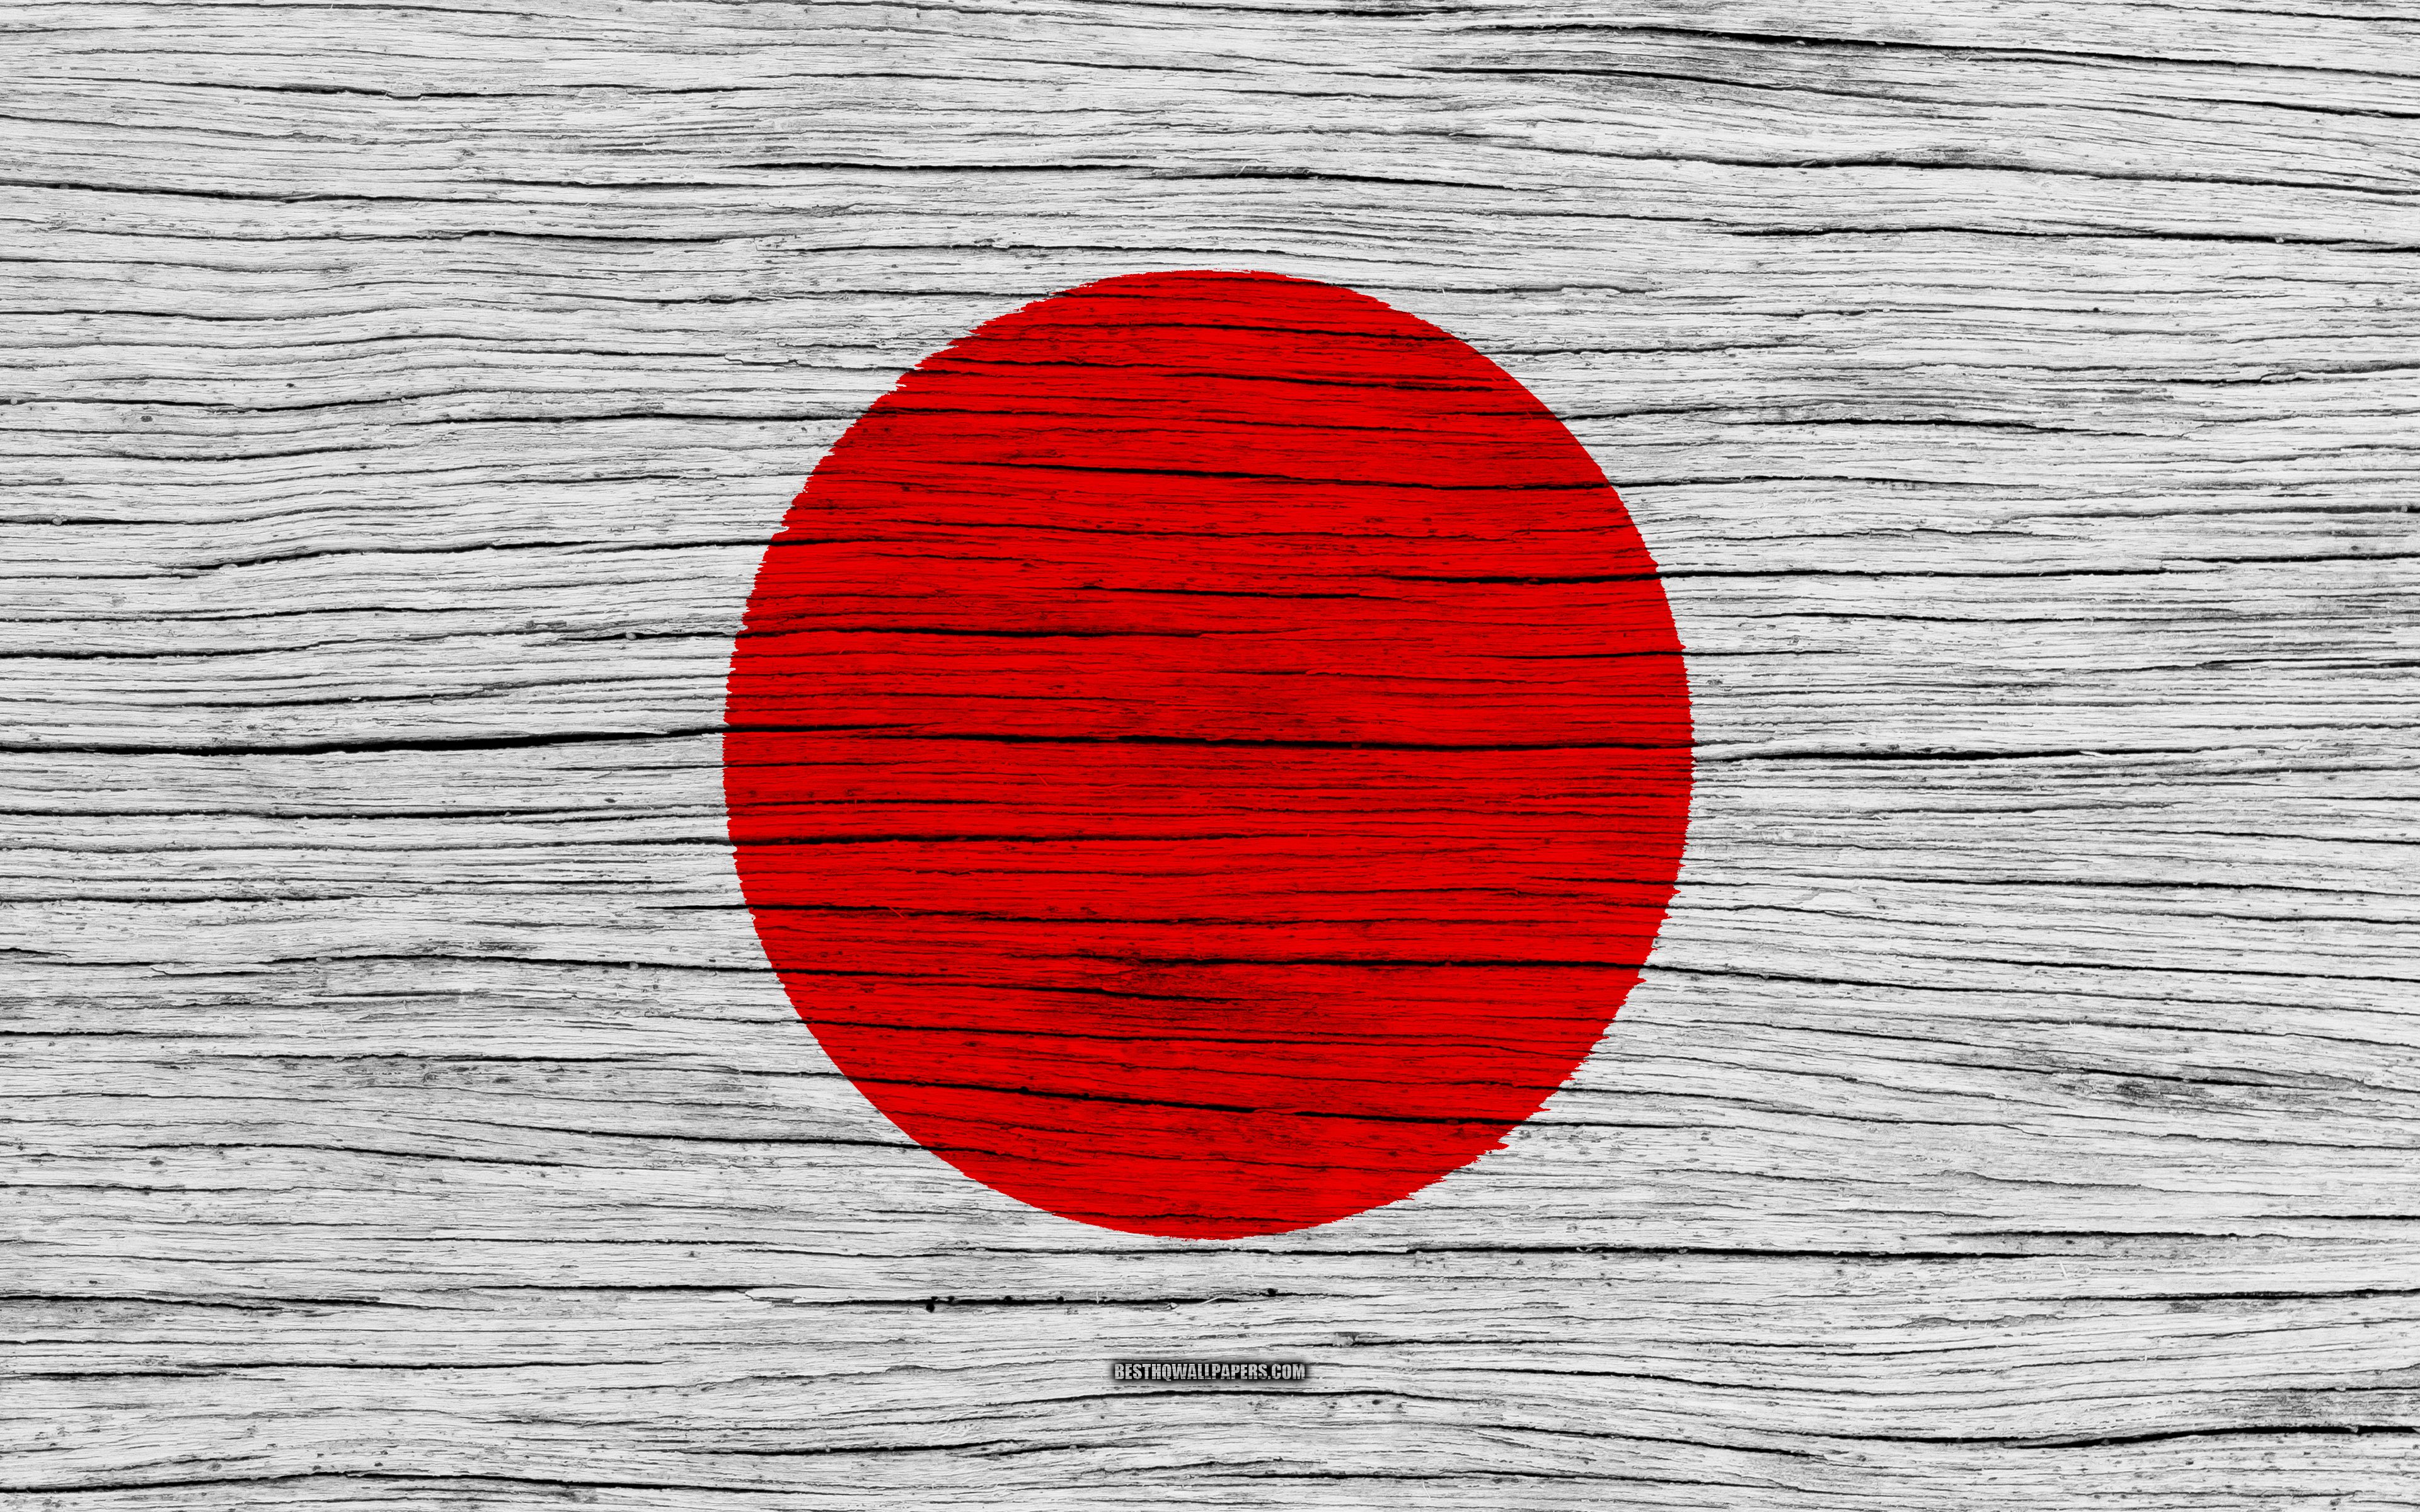 Download wallpaper Flag of Japan, 4k, Asia, wooden texture, Japanese flag, national symbols, Japan flag, art, Japan for desktop with resolution 3840x2400. High Quality HD picture wallpaper